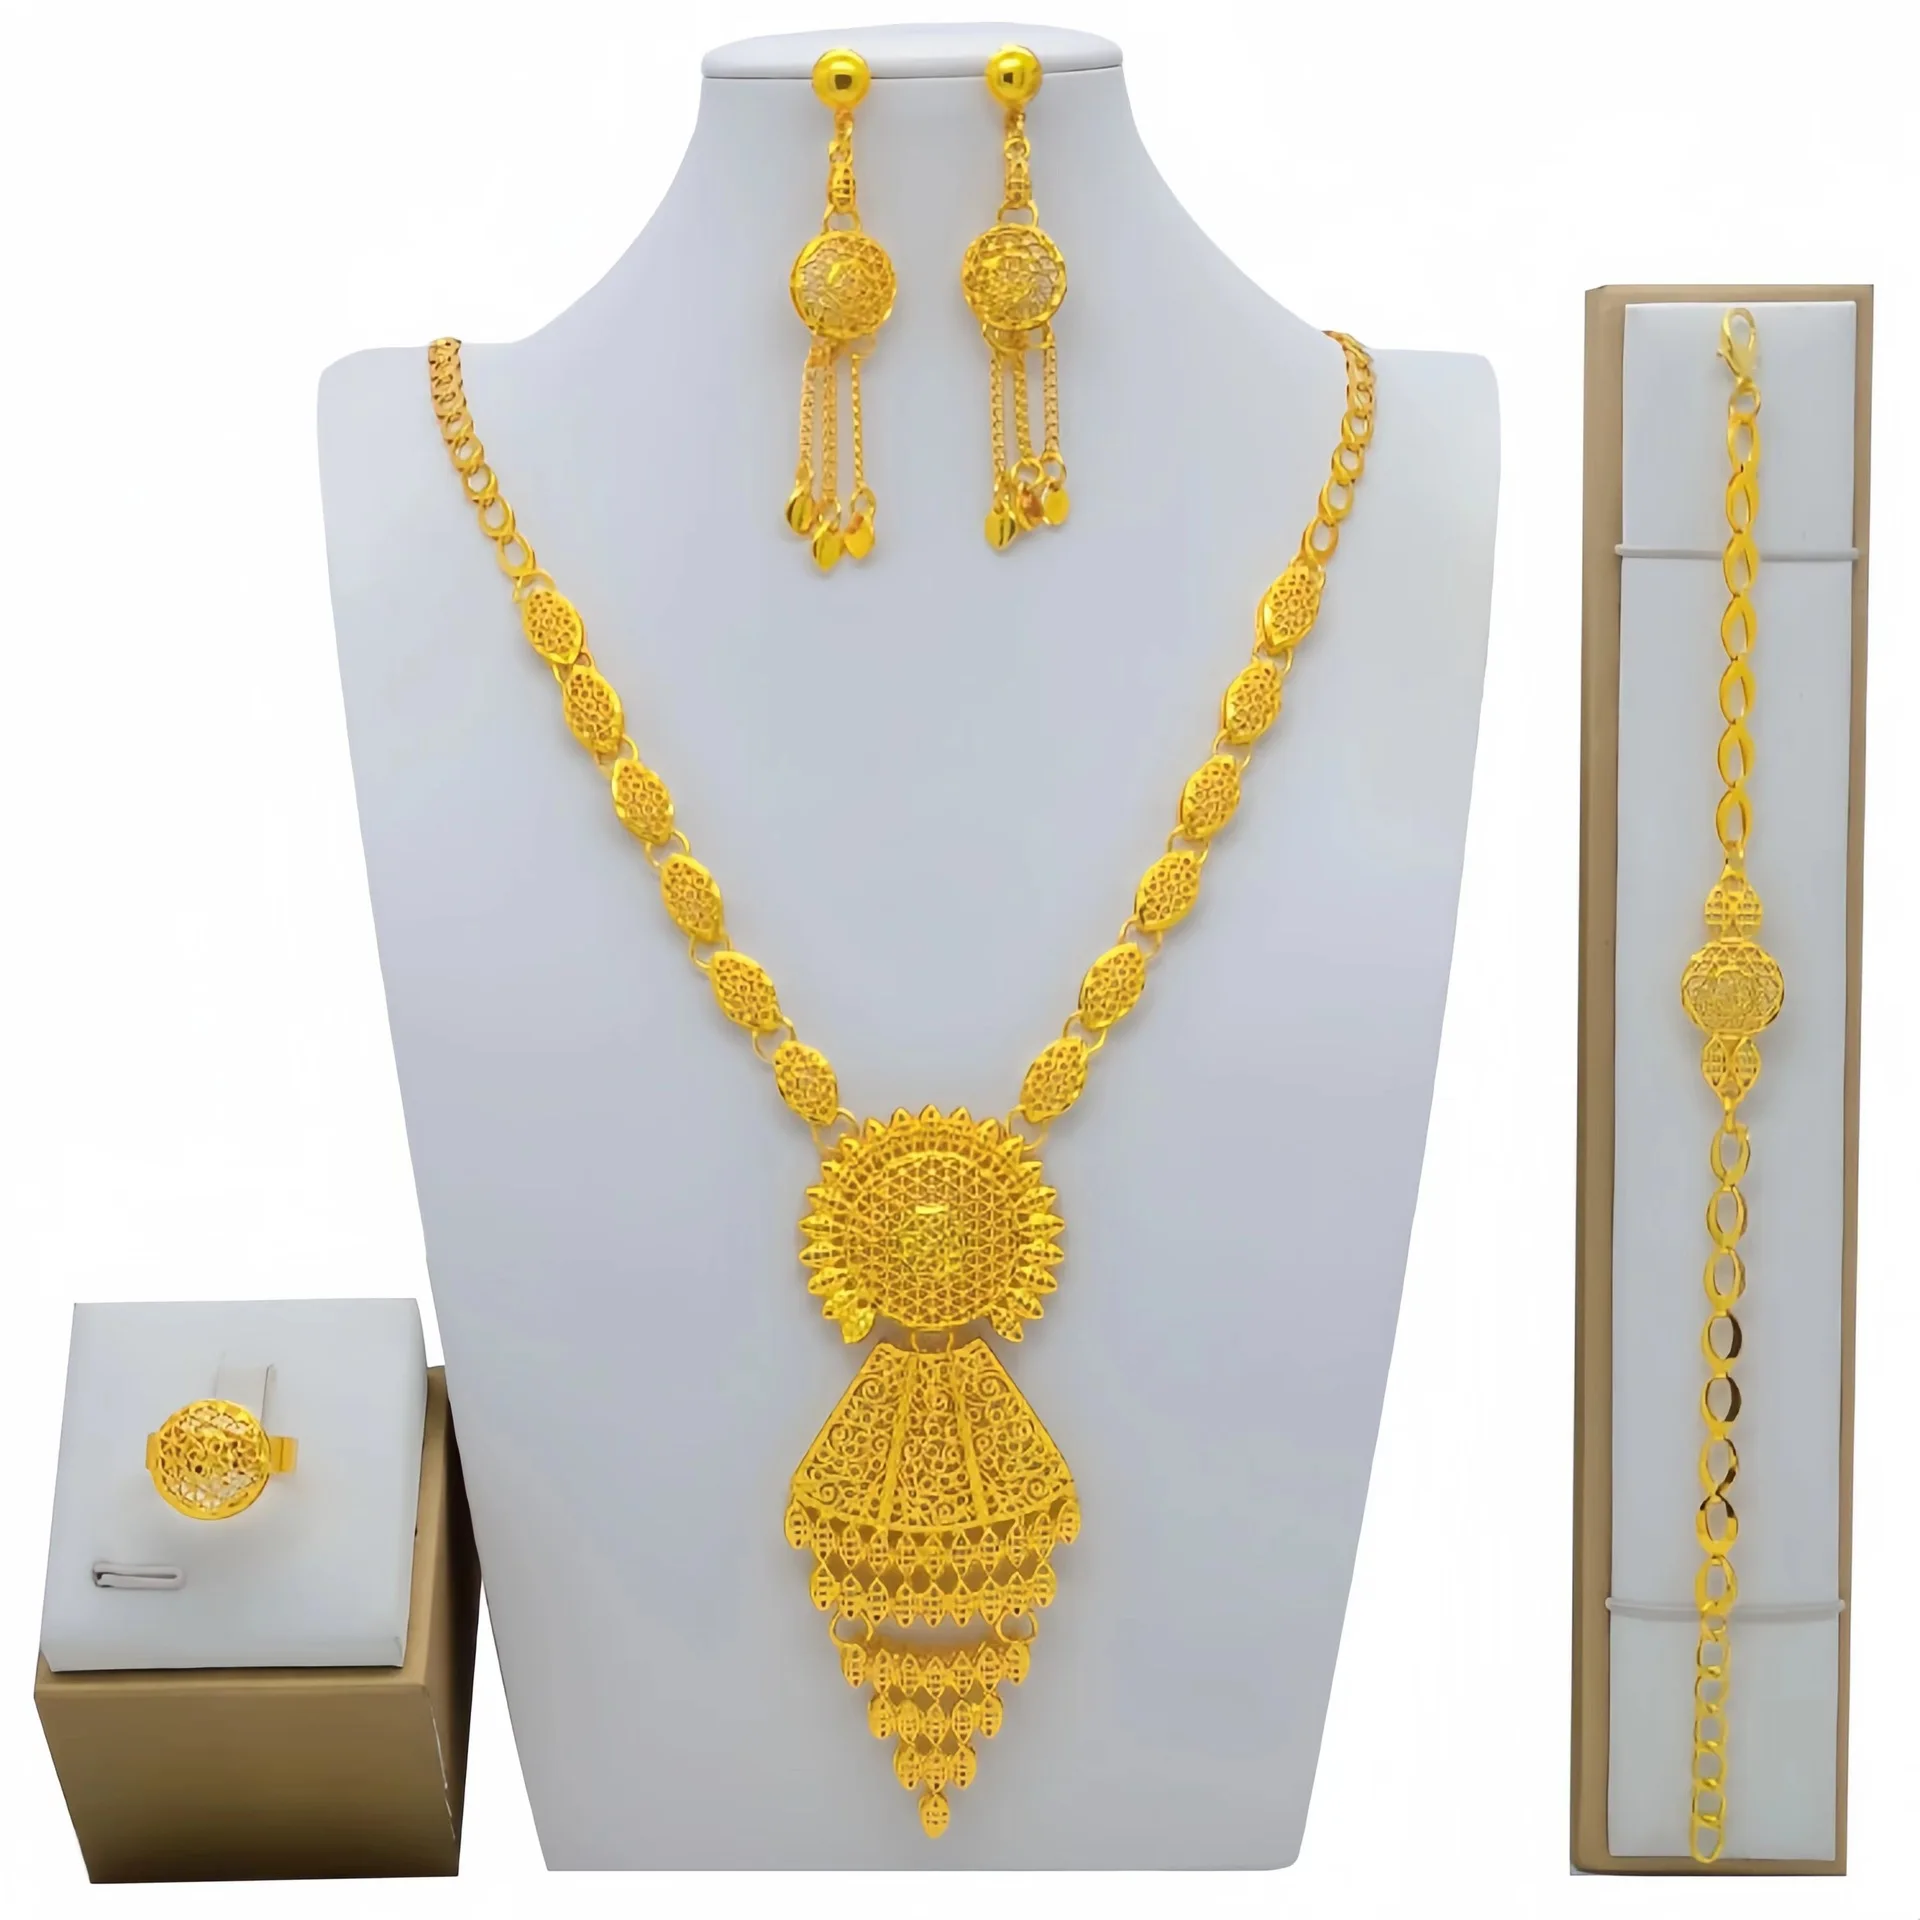 Dubai 24K Gold Plated Jewelry Set Bride Wedding Necklace Bracelet Earrings Ring Bu10253 dubai gold